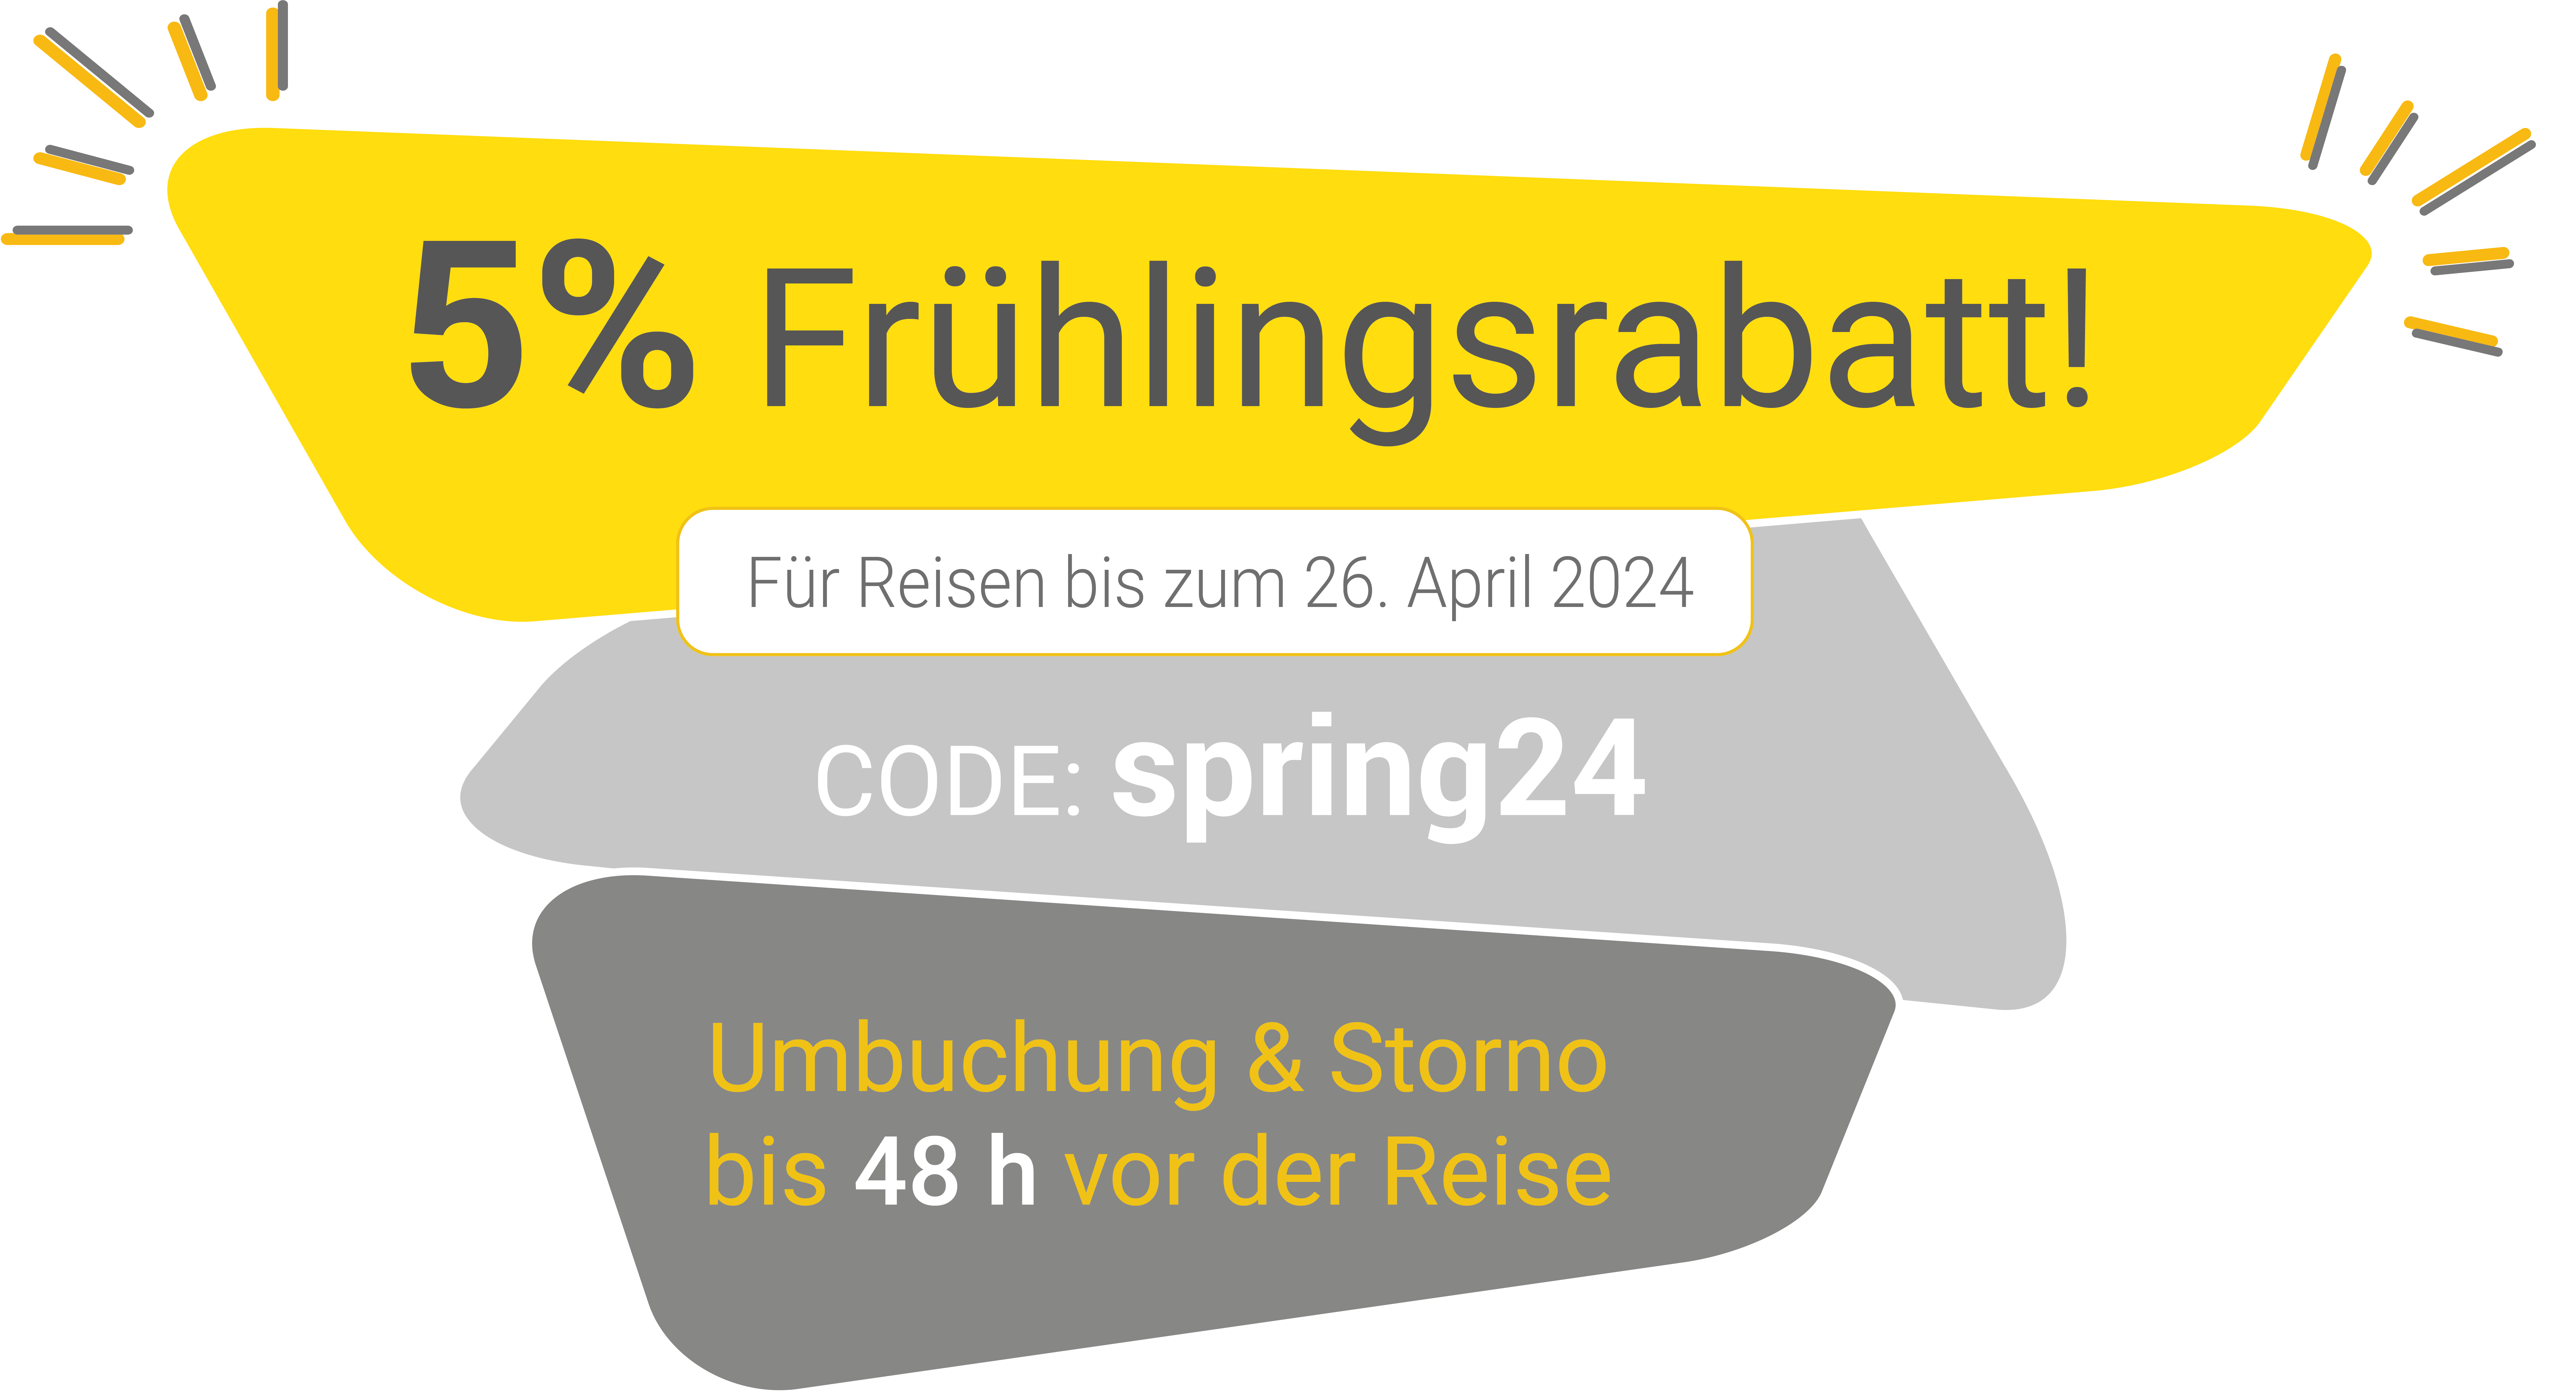 Infografik zum Frühlingsrabatt Code "spring24"